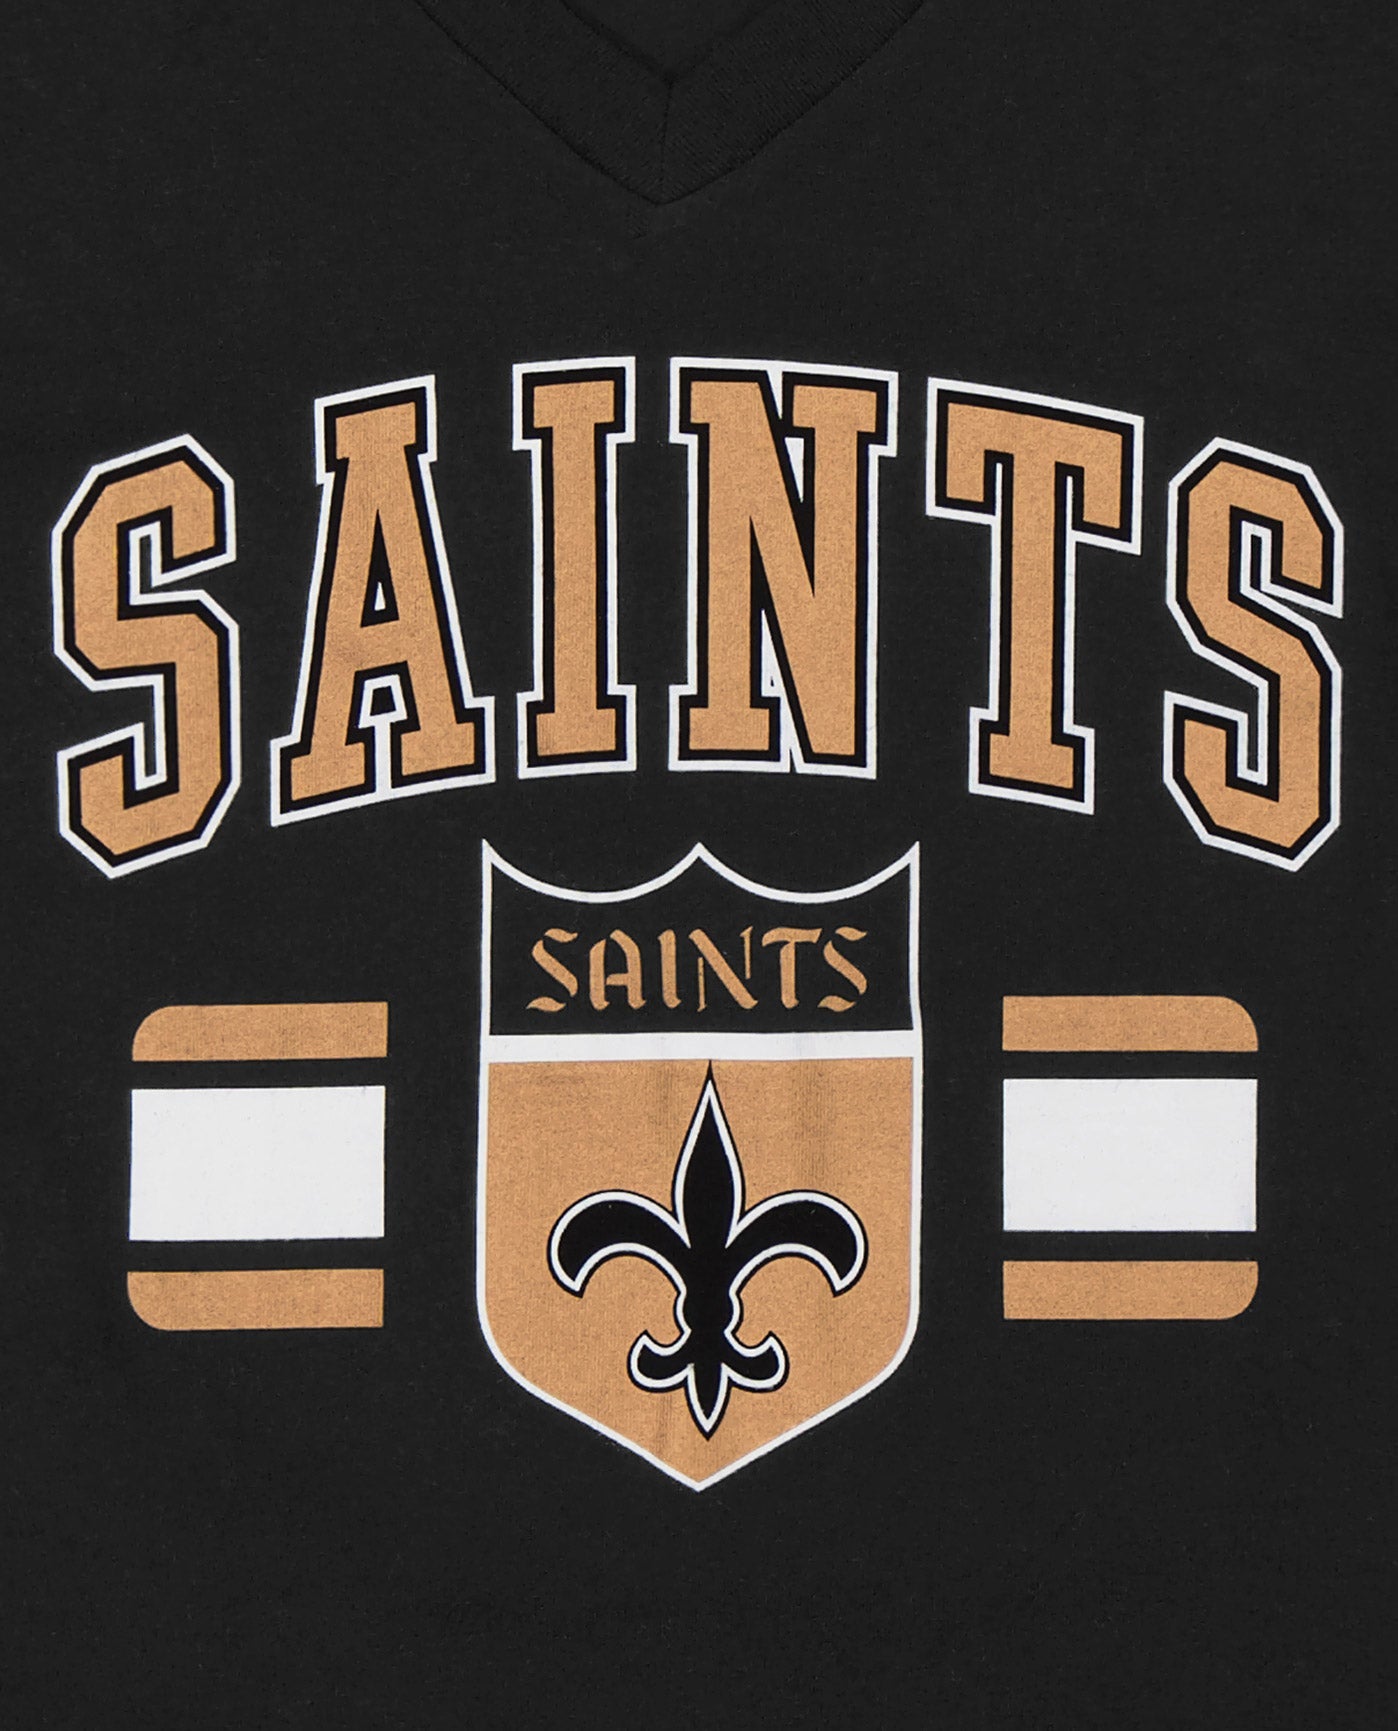 nola saints shirt